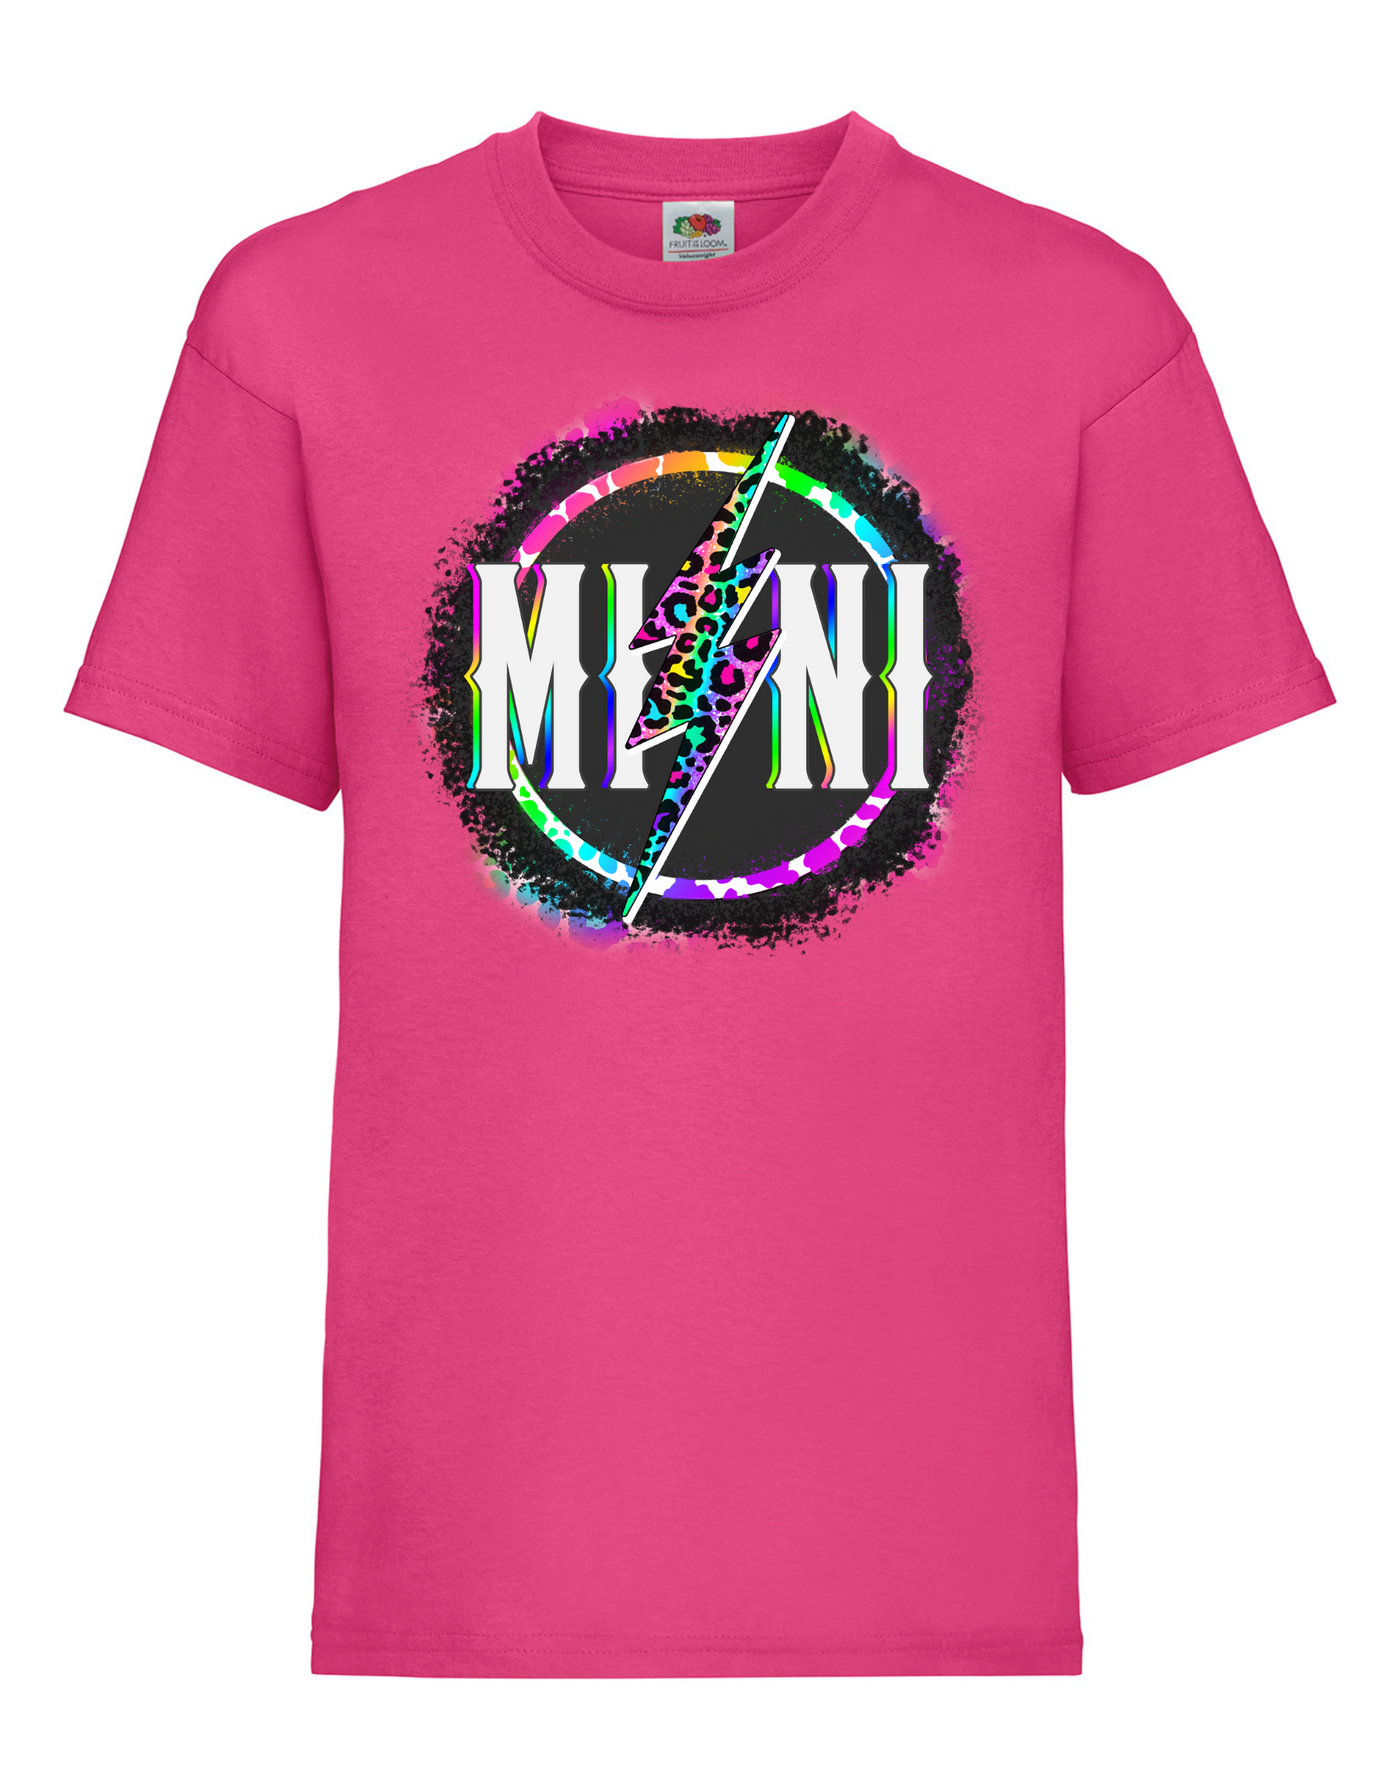 Hot Pink "Mini” Rock Kids Unisex Slogan T-Shirt